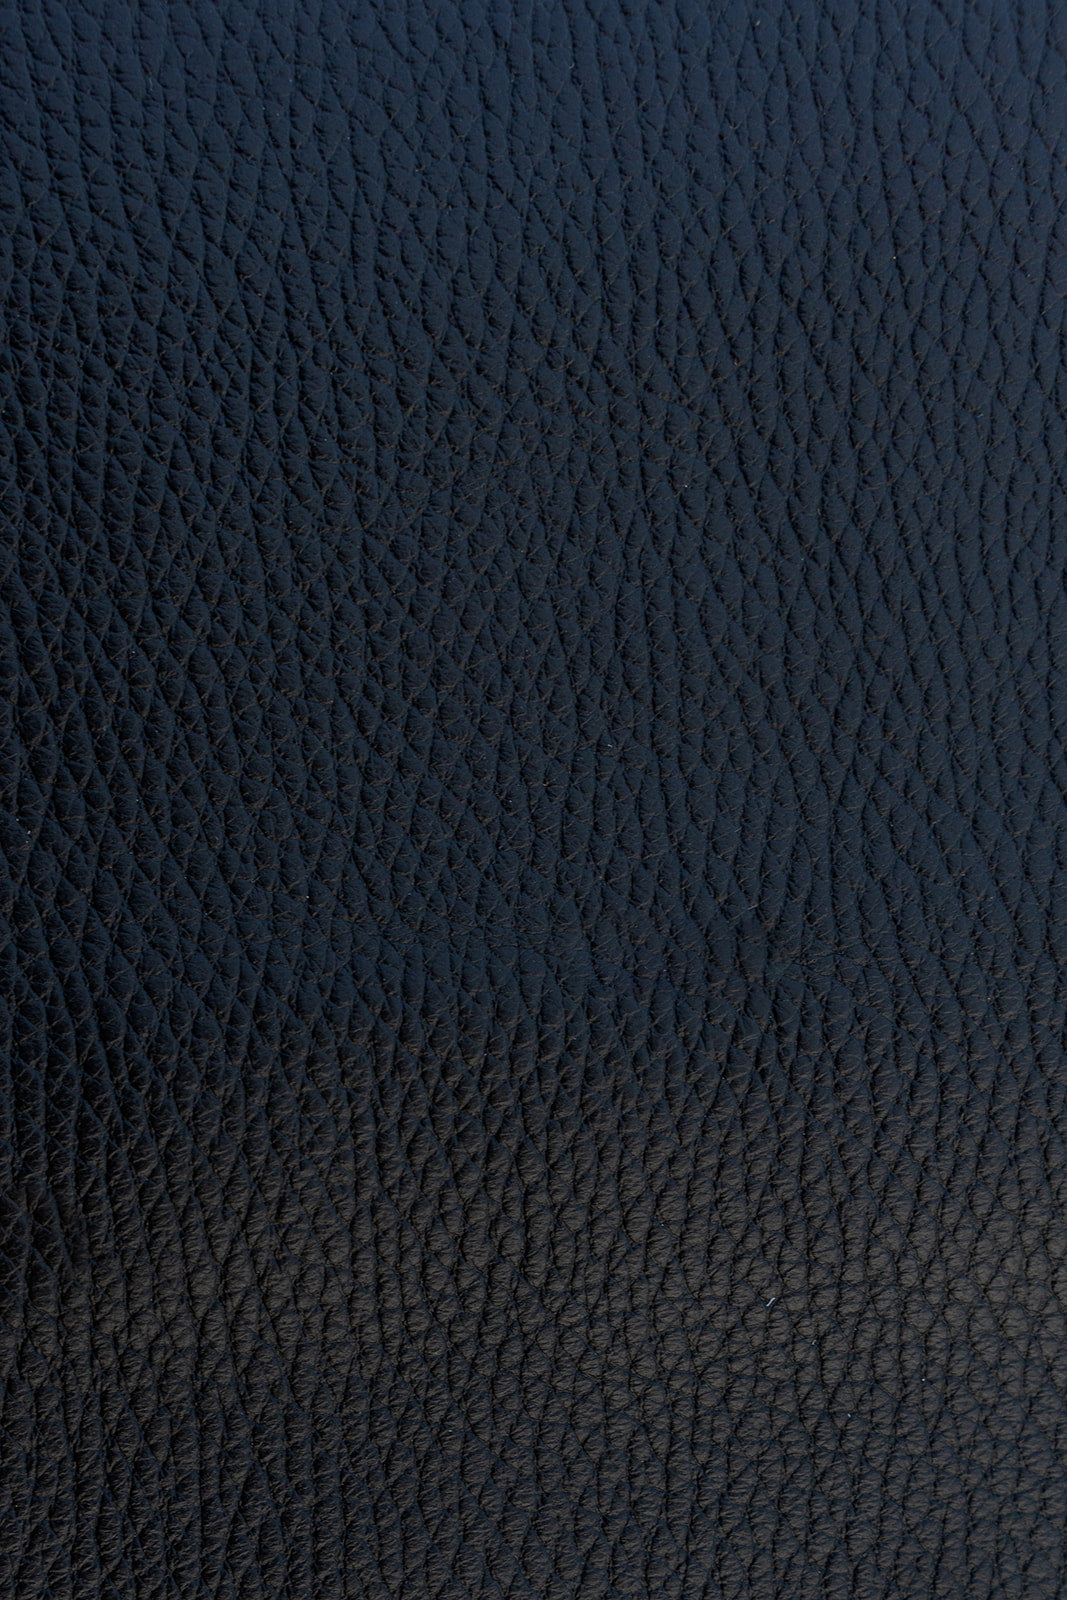 JL wallet leather - Caviar black